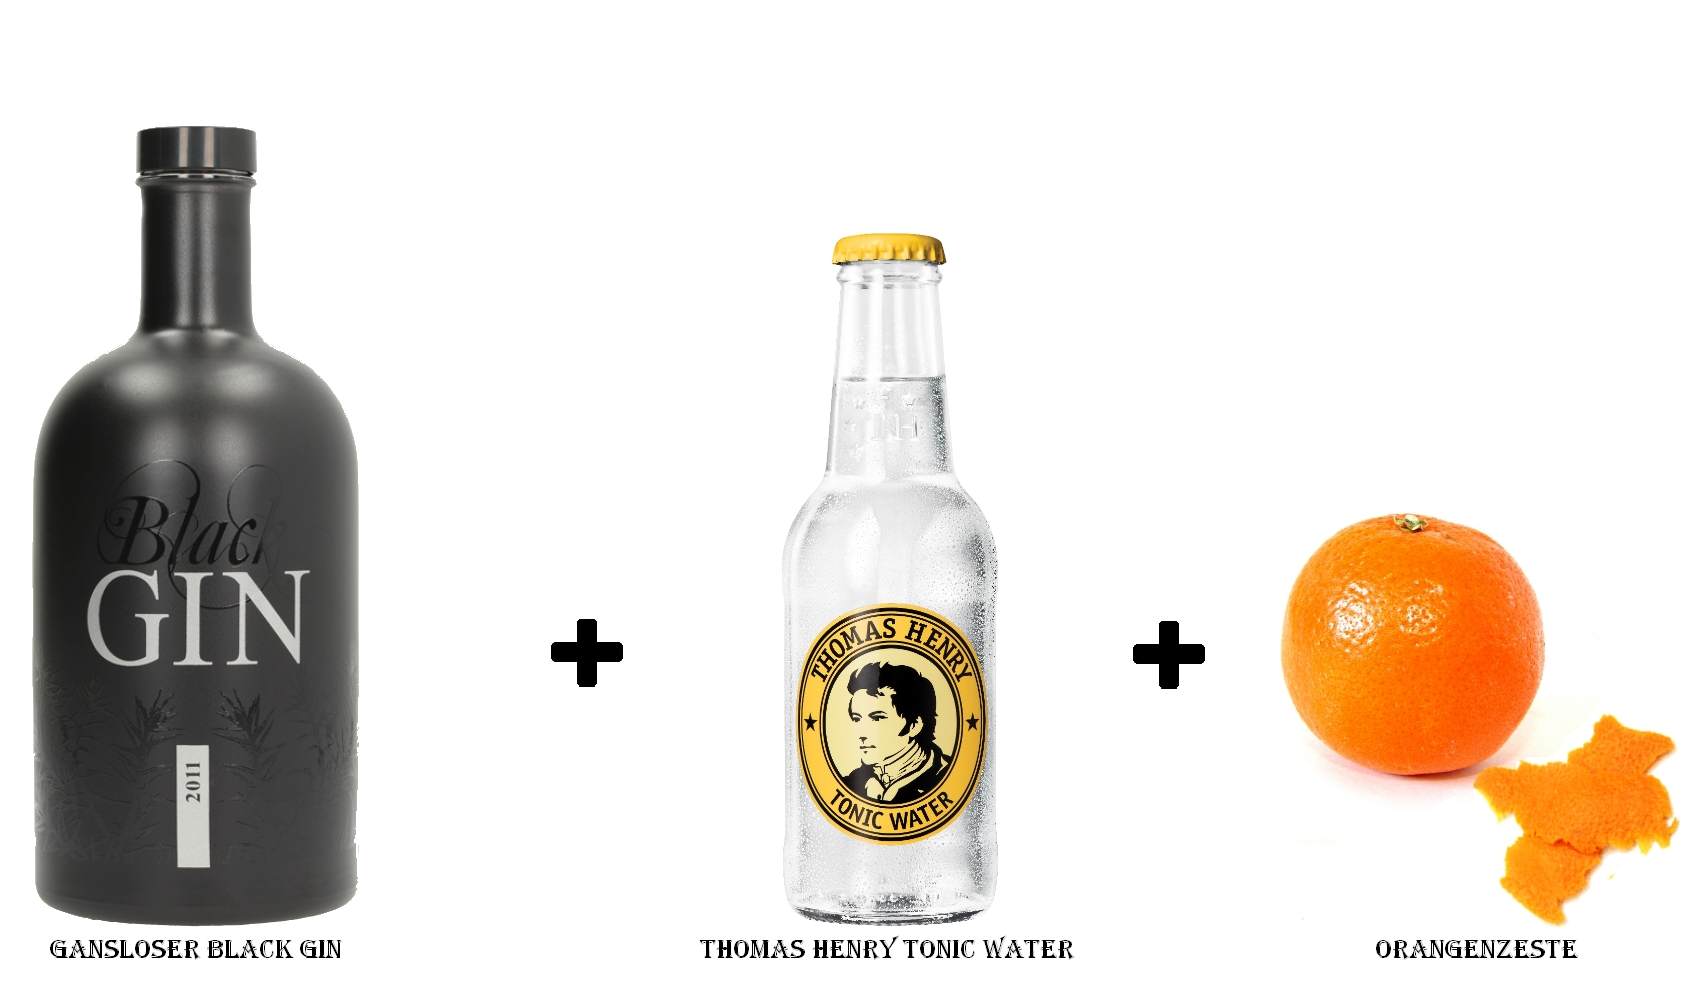 Gansloser Black Gin + Thomas Henry Tonic Water + Orangenzeste